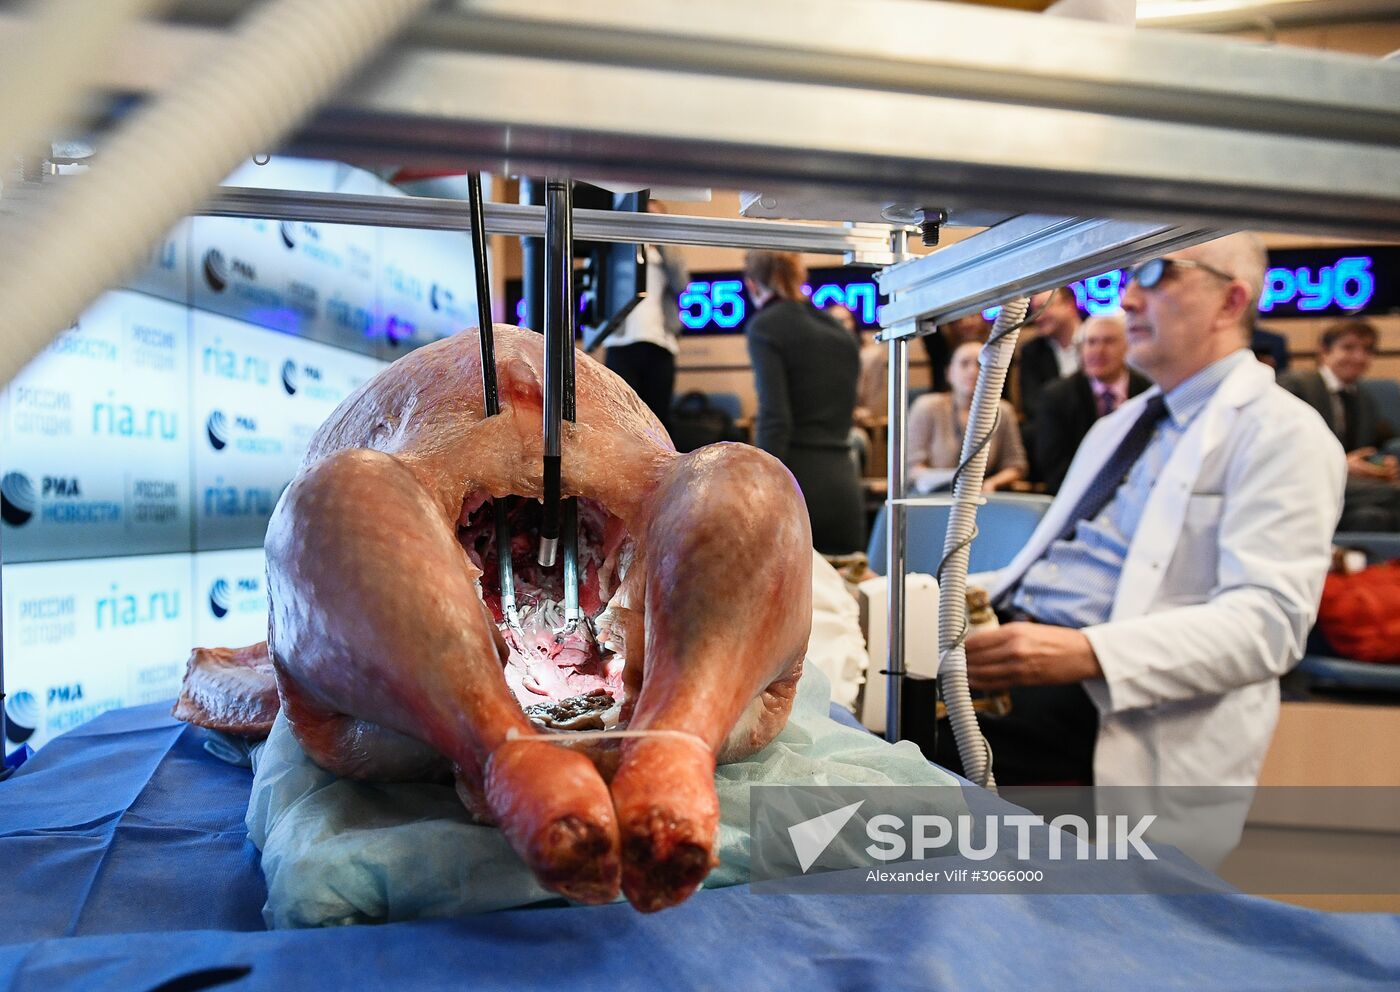 Presentation of Russian robot-assisted surgical system at Rossiya Segodnya